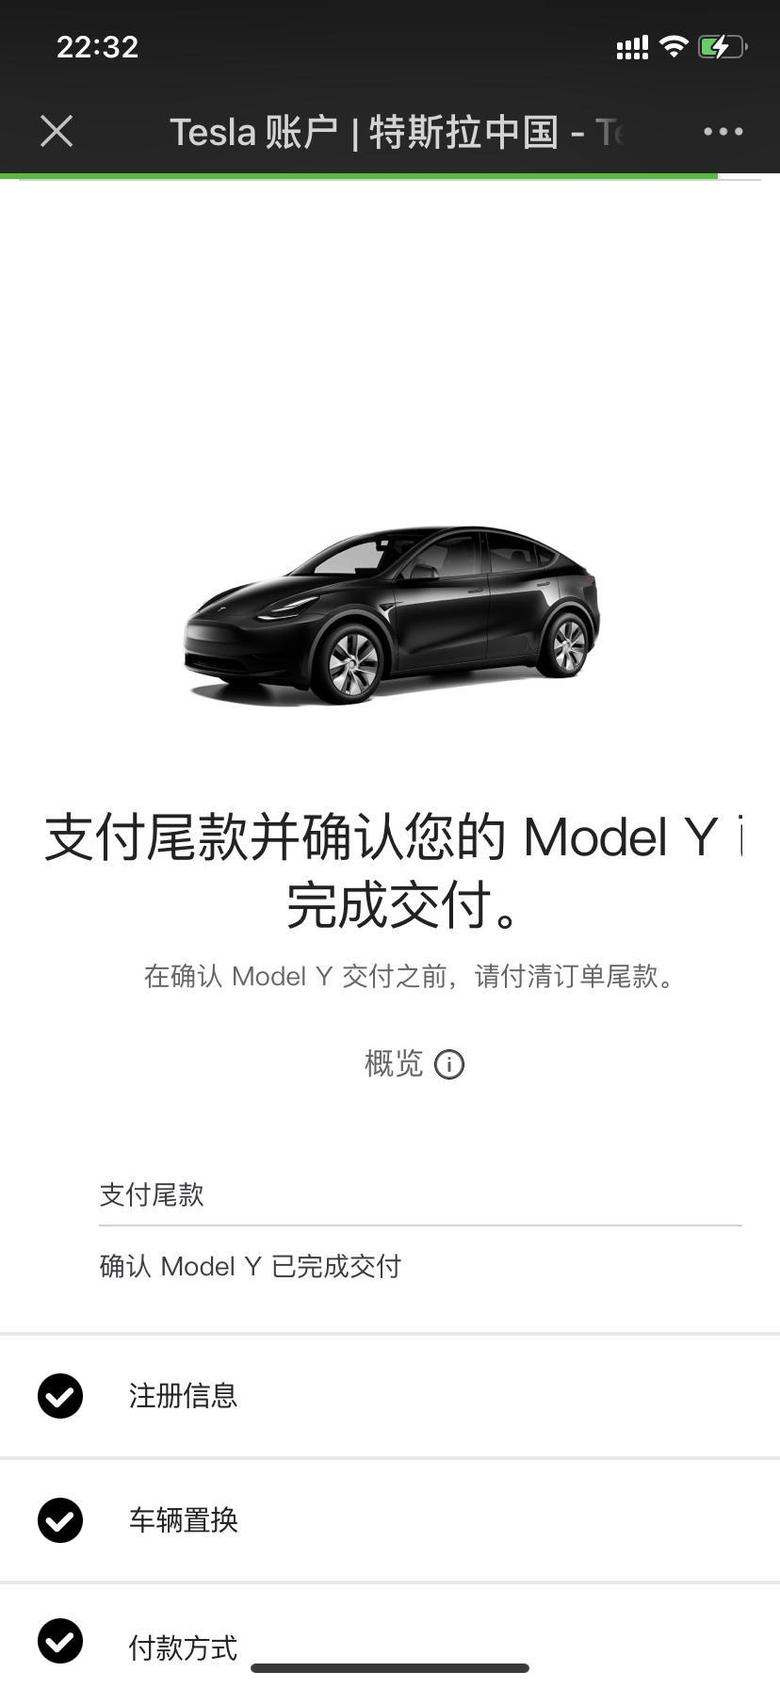 model y 向各位车友汇报一下，9月17日，深圳，19轮，黑内黑外，丐中丐！预计周末提车！